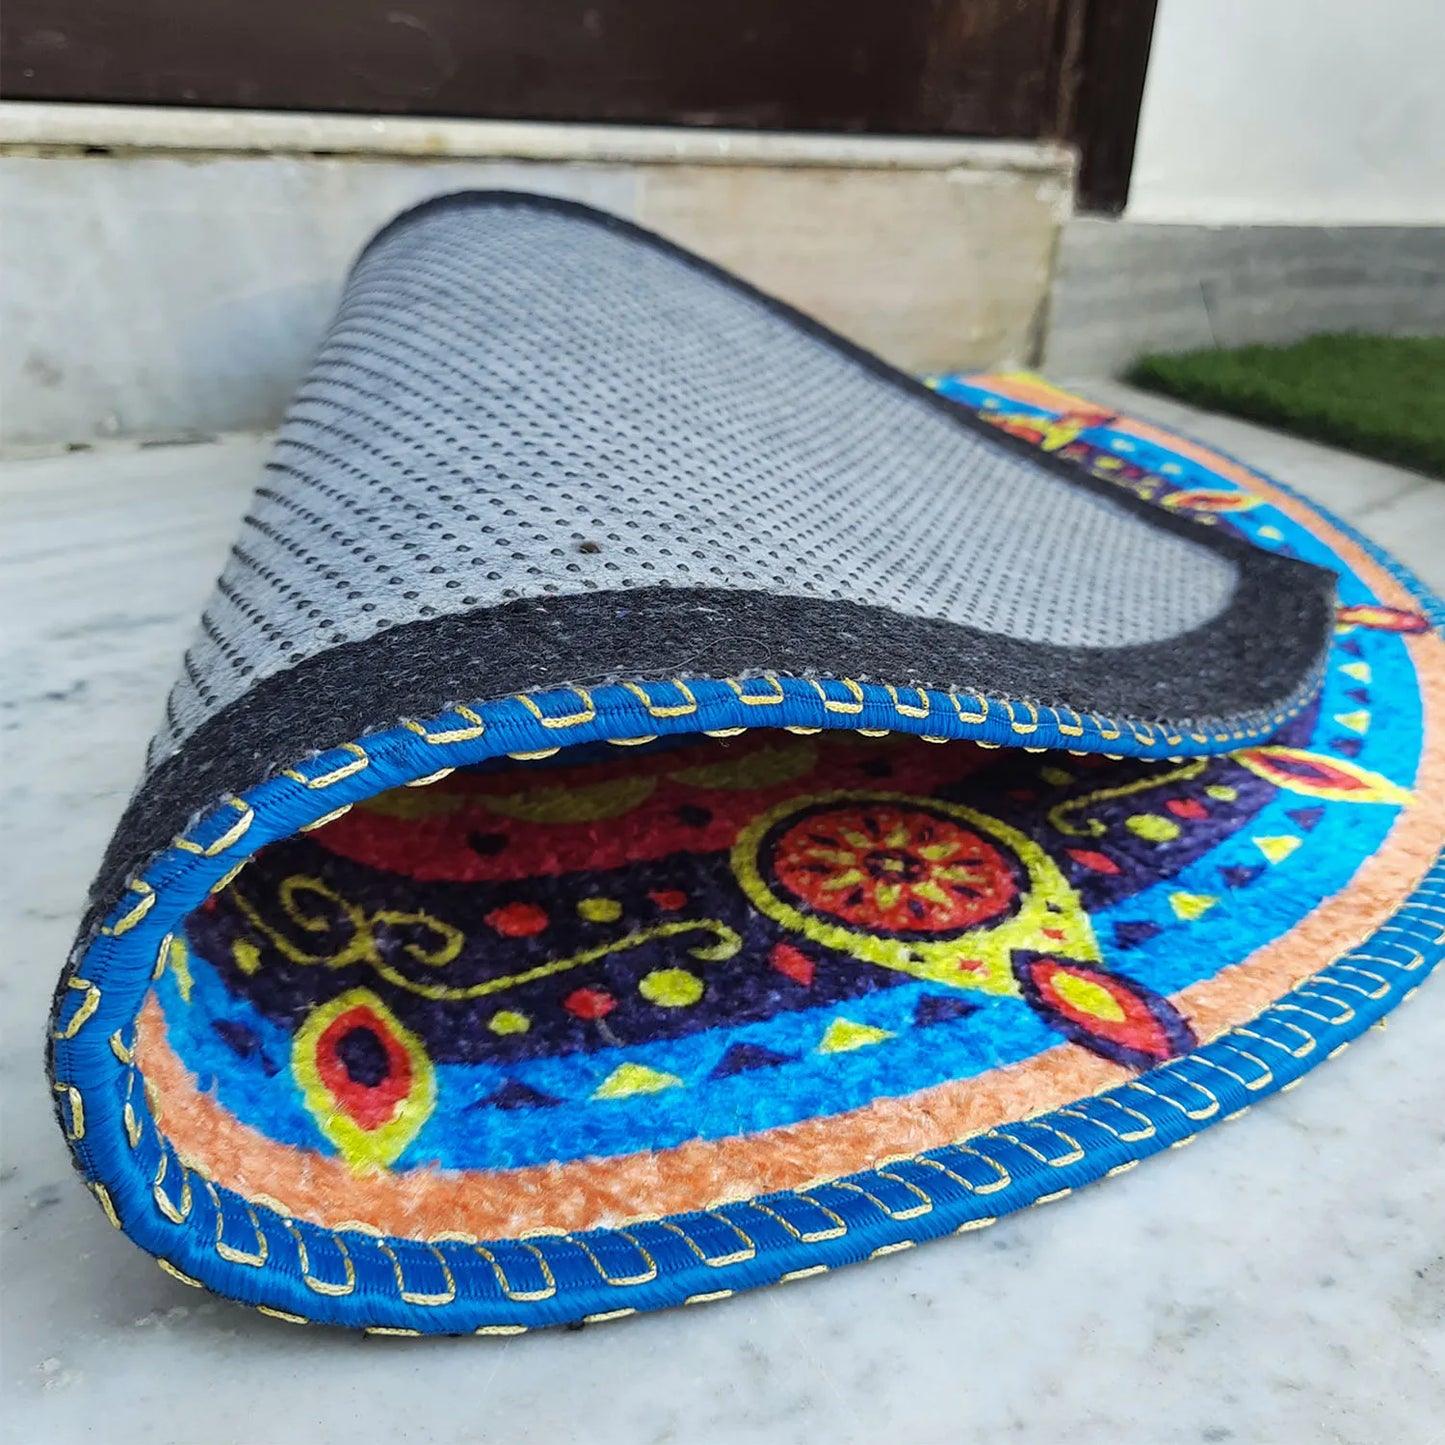 Avioni Home Floor Mats in Beautiful Traditional Lakshmi Padma (Feet) Design – Anti Slip, Durable & Washable | Outdoor & Indoor